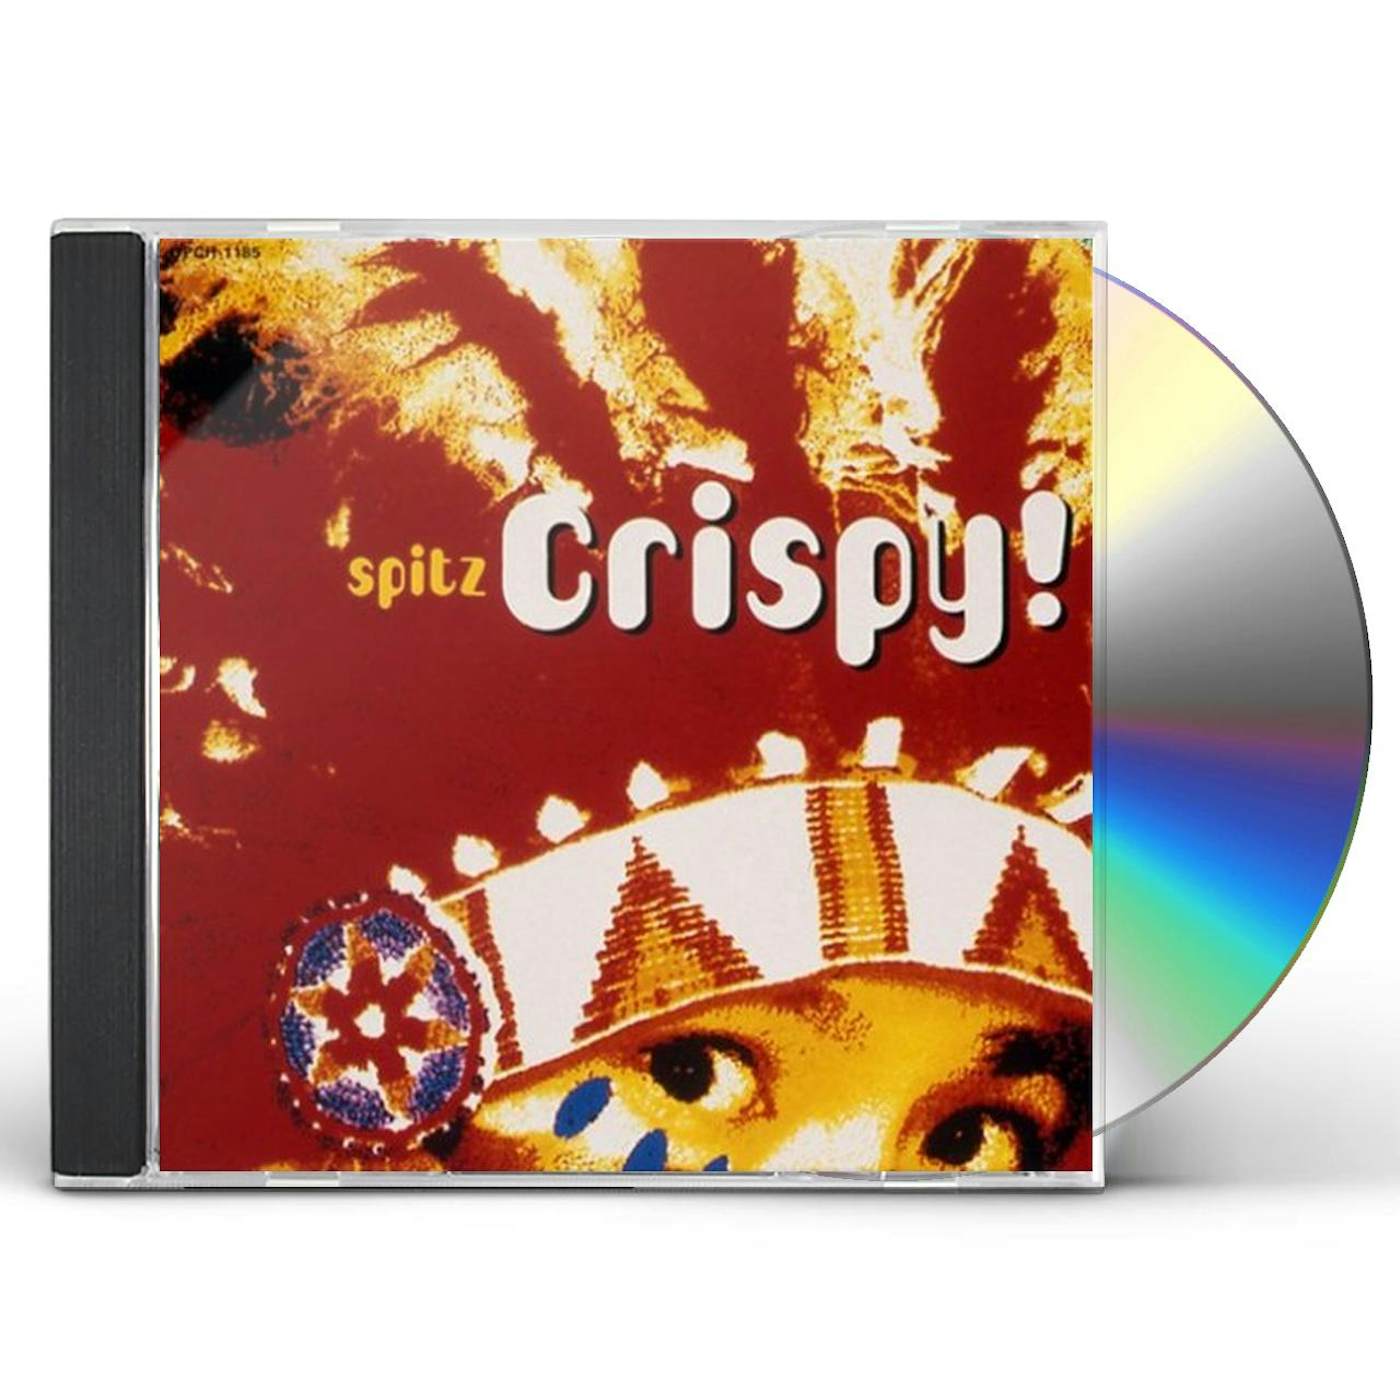 SPITZ CRISPY! CD